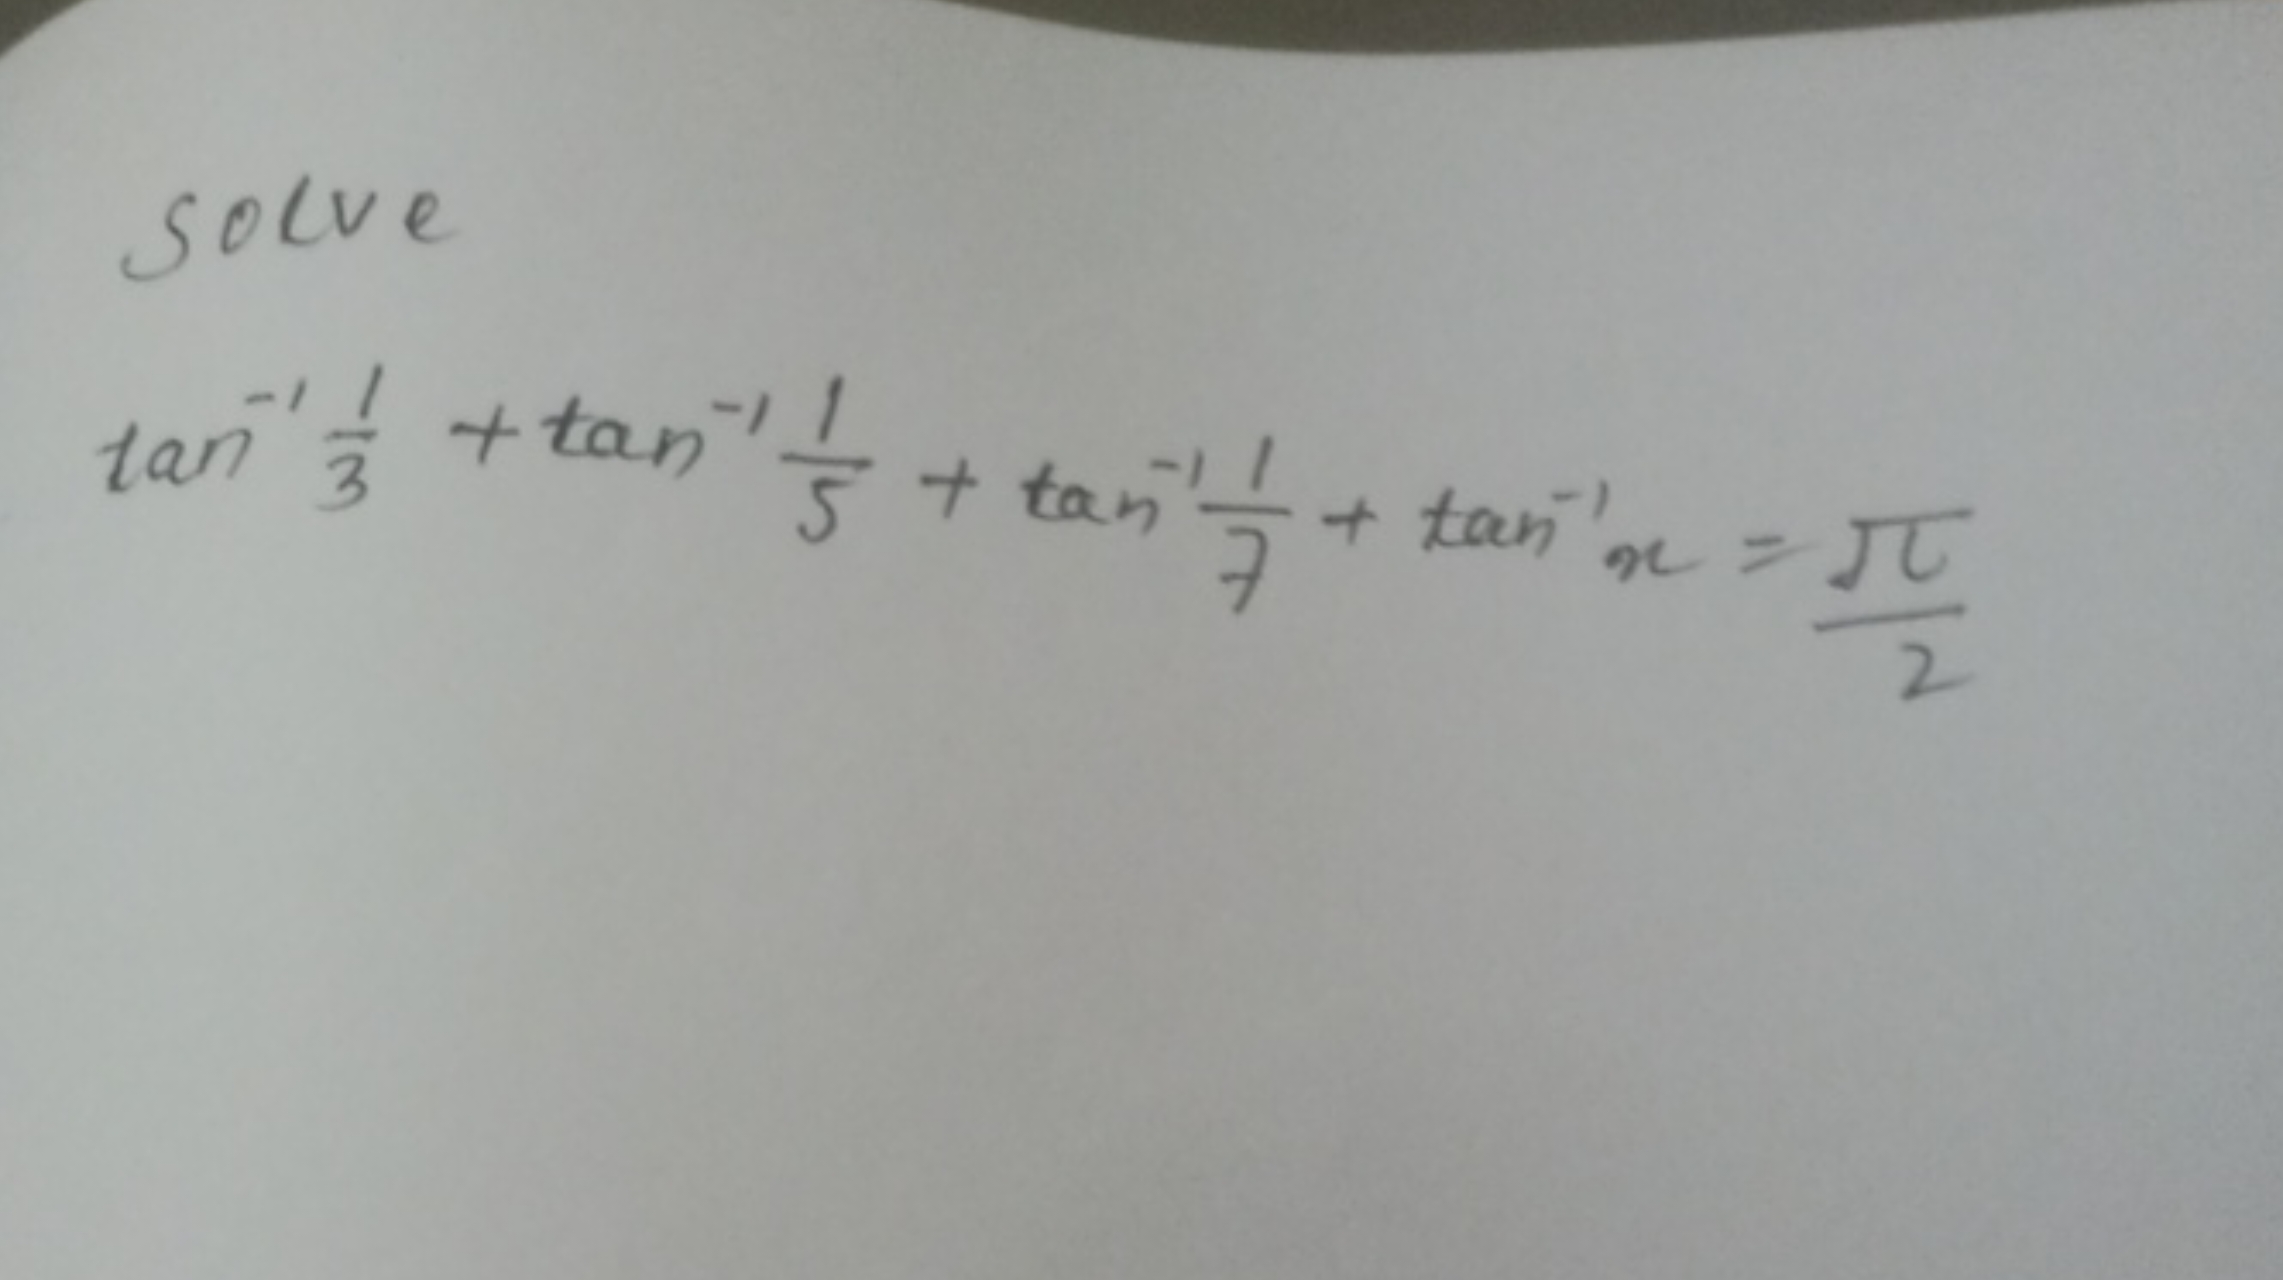 solve
tan−131​+tan−151​+tan−171​+tan−1x=2π​
